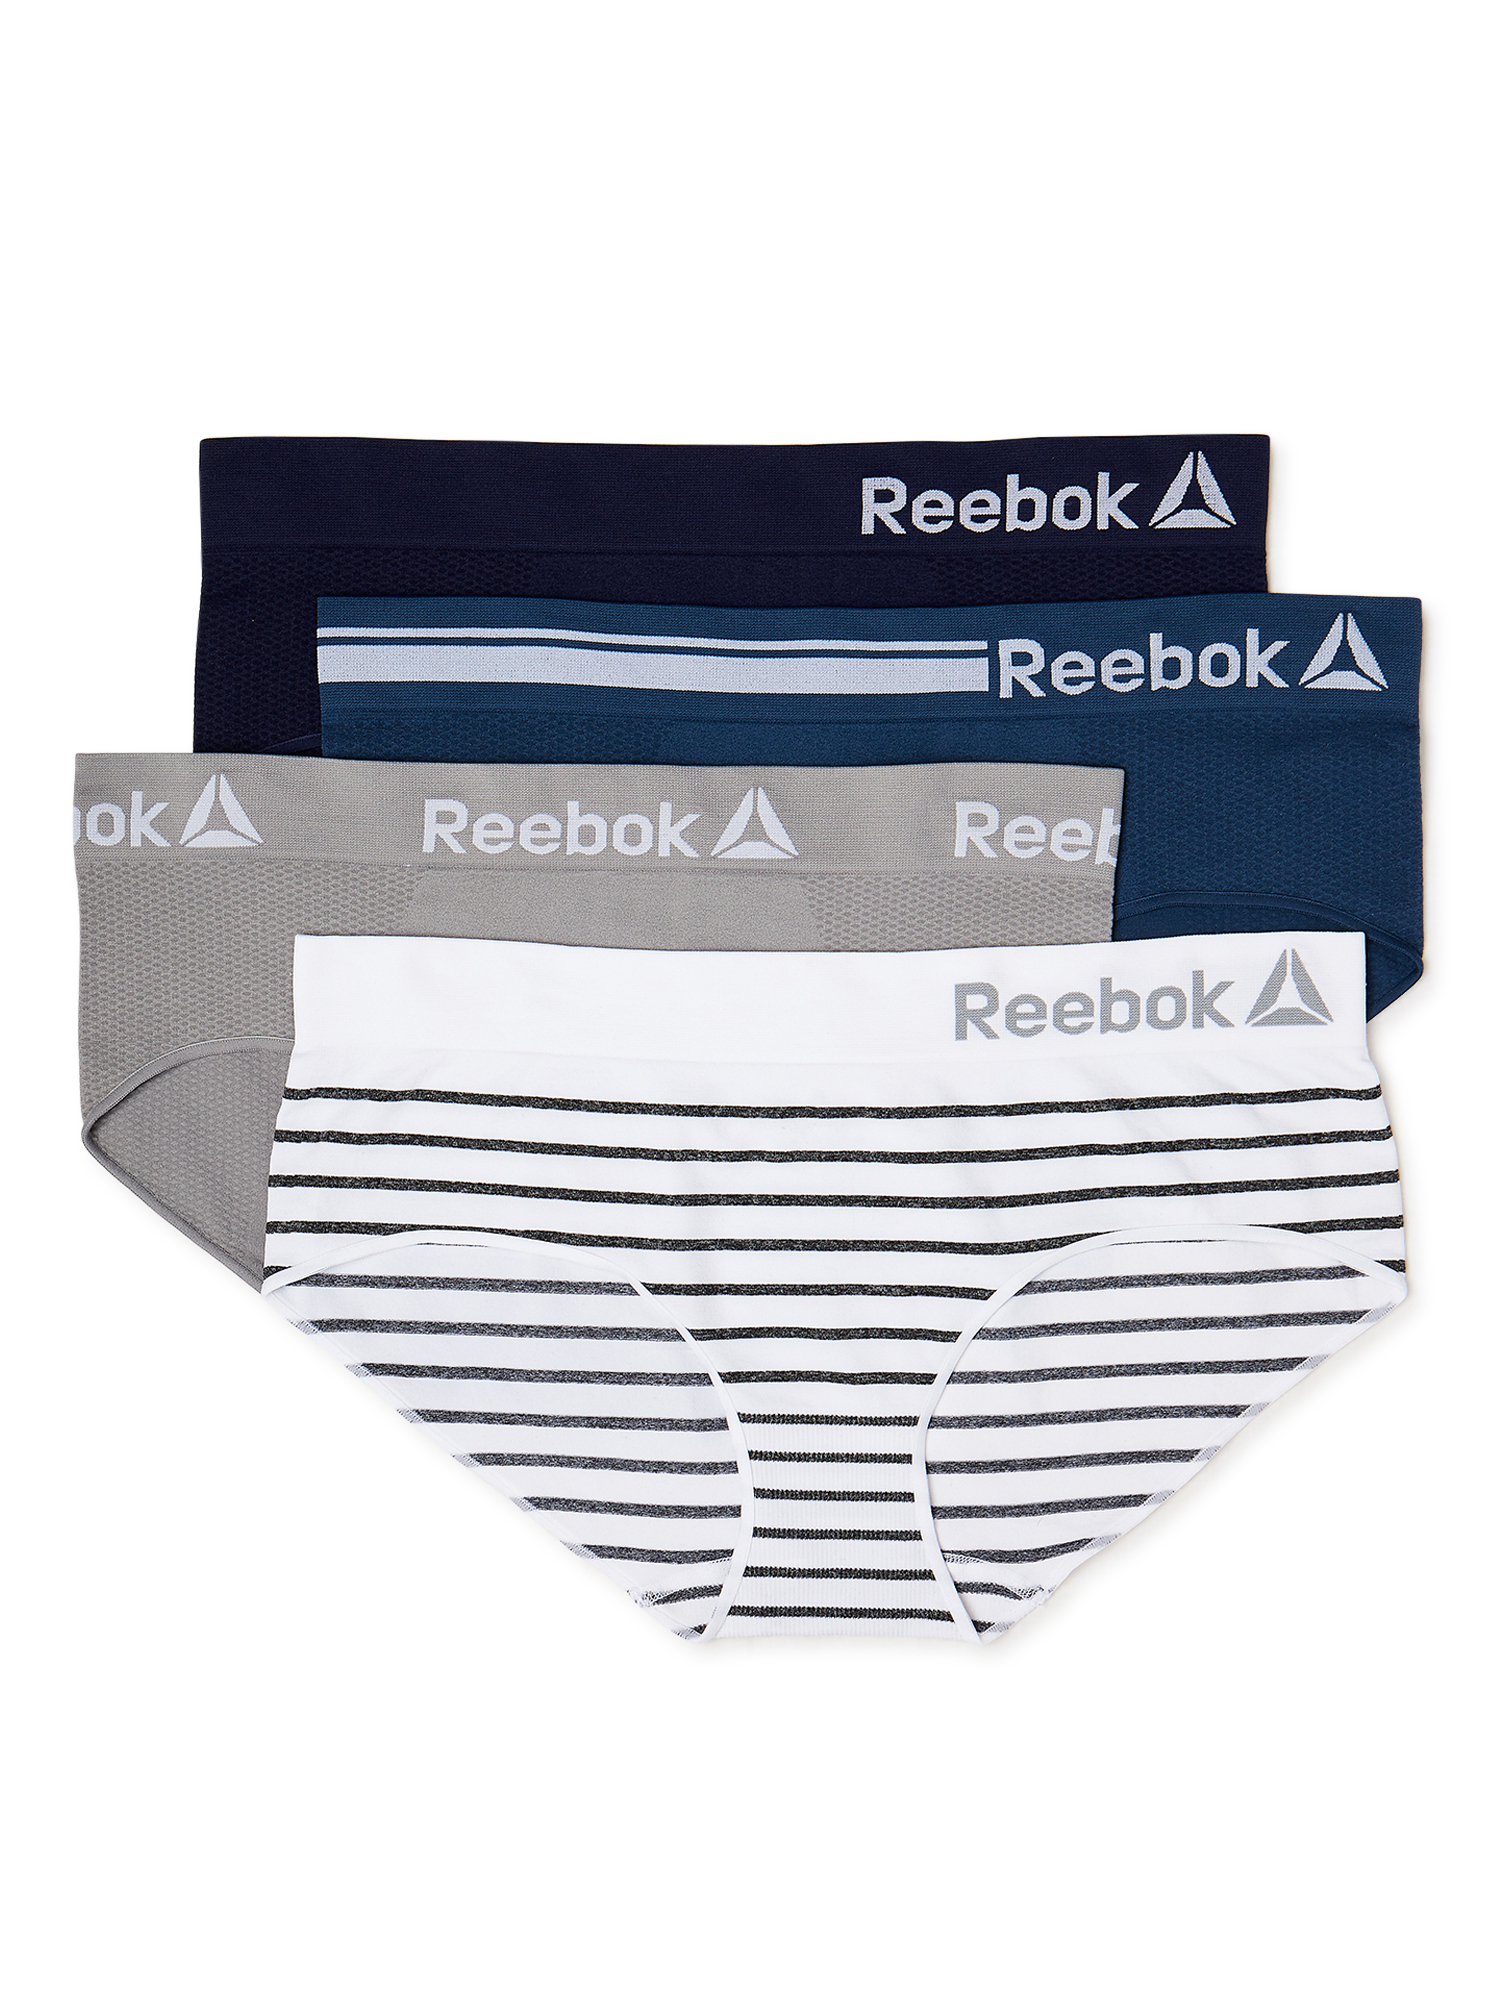 Reebok Women's Underwear Seamless Hipster Panties, 4-Pack - image 6 of 10